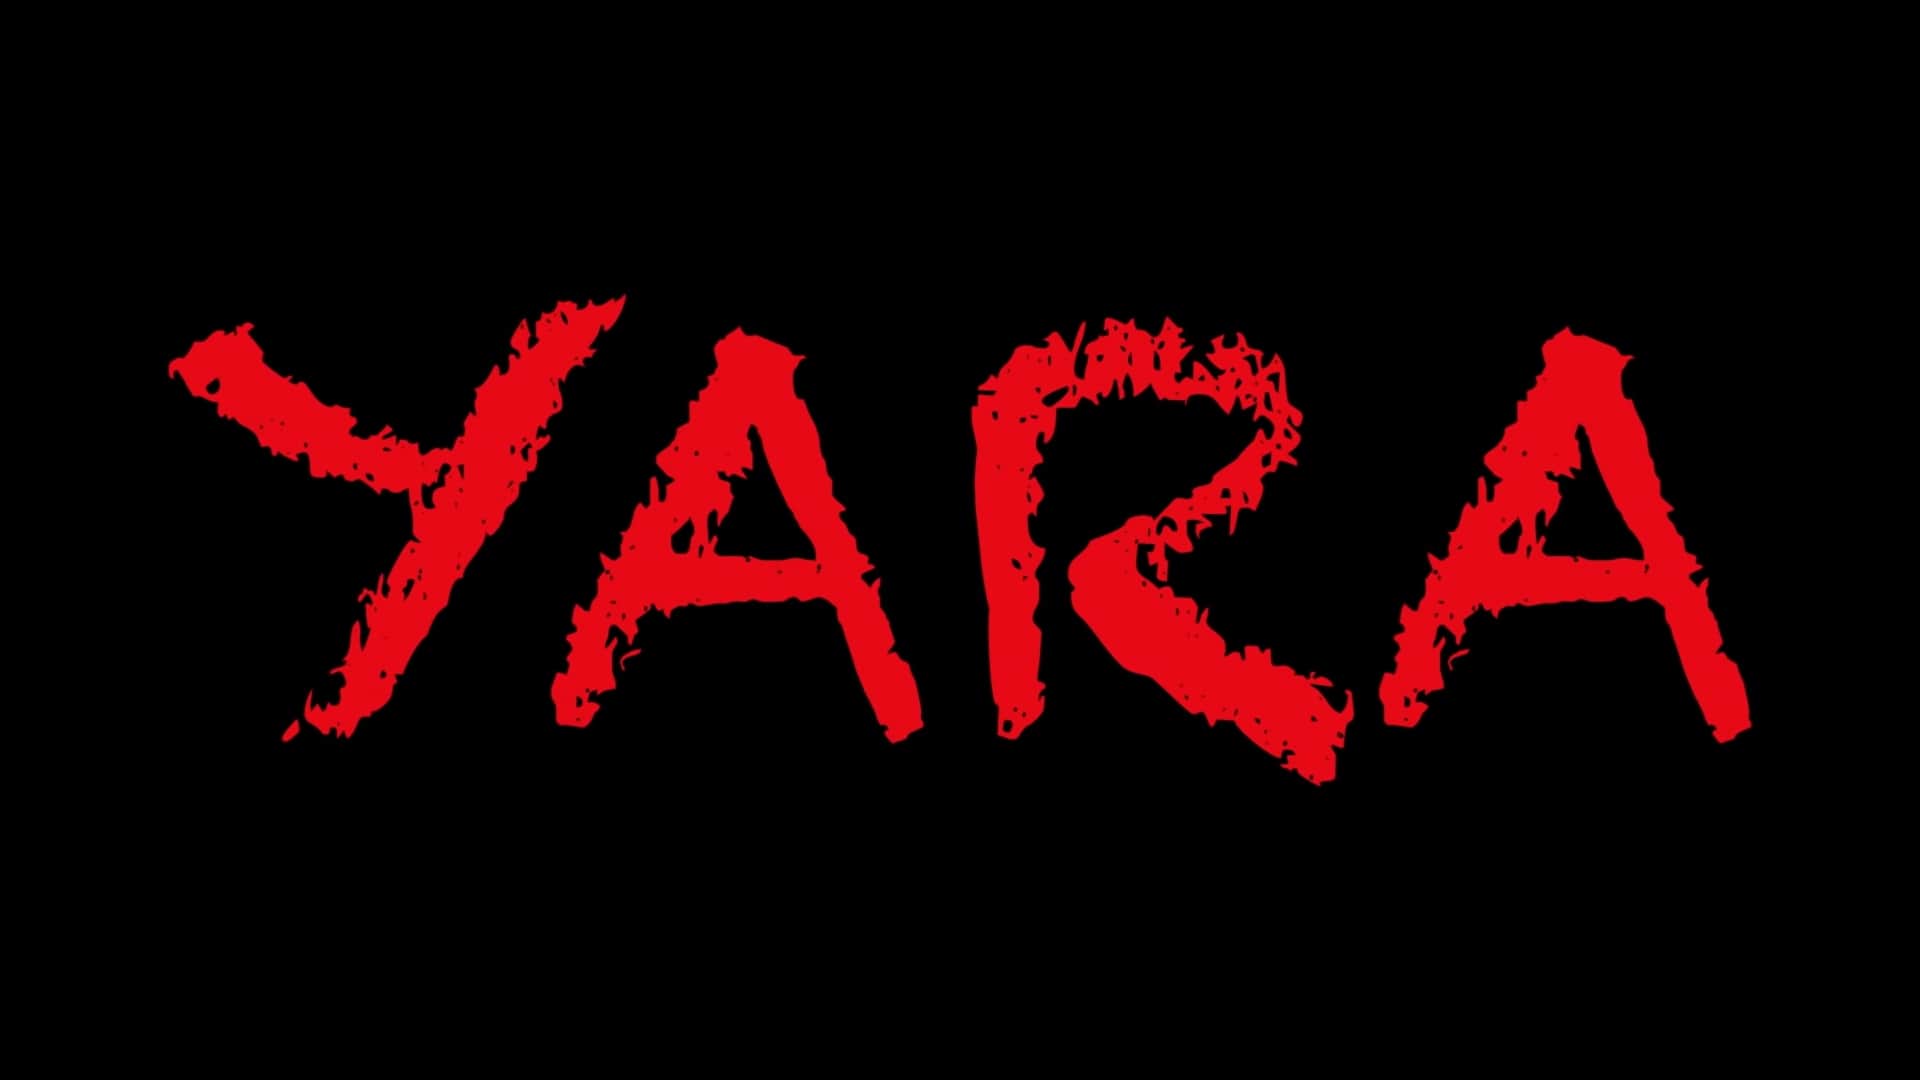 Netflix Yara Trailer, Coming to Netflix in November 2021